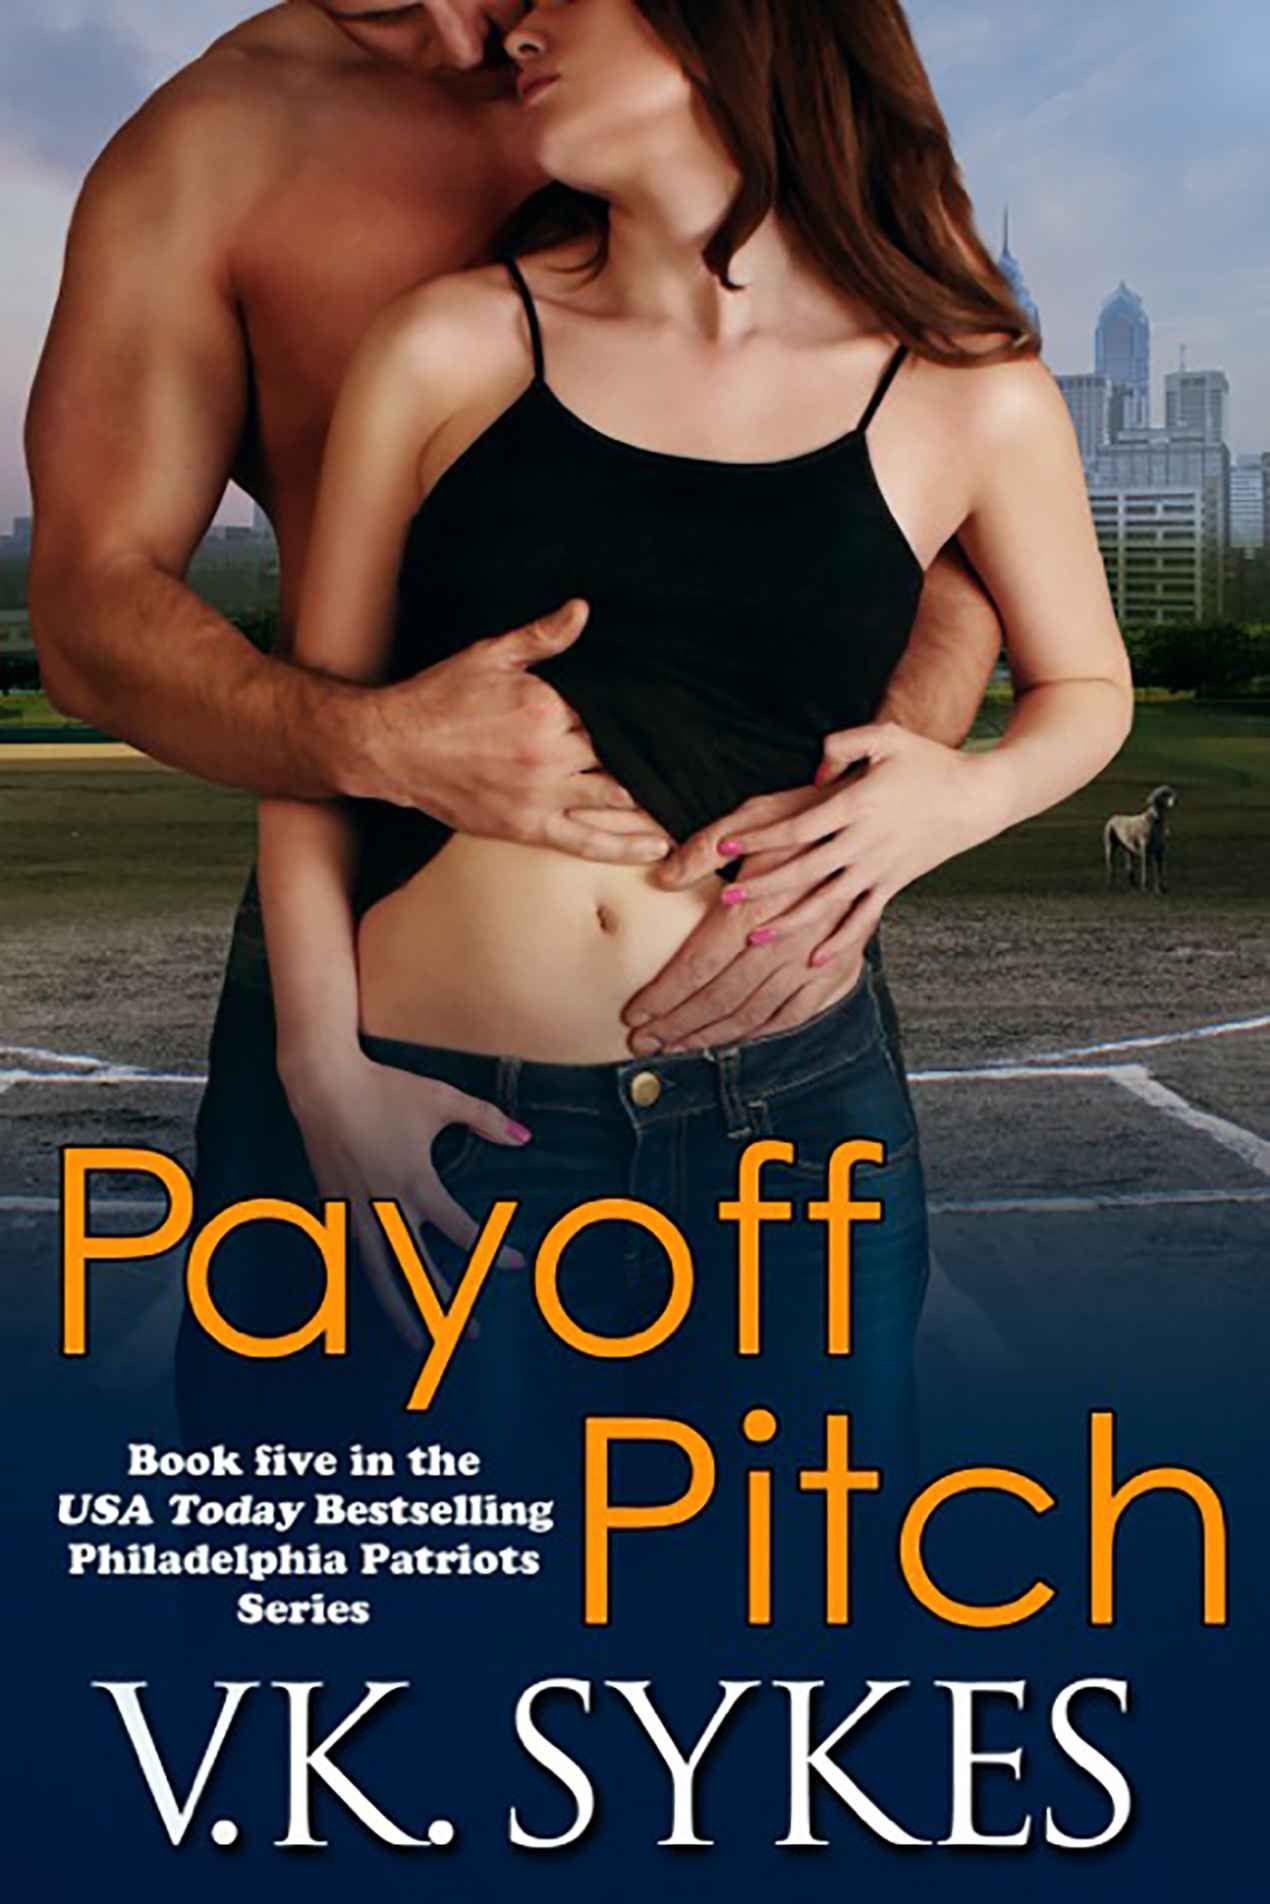 Payoff Pitch (Philadelphia Patriots) by V.K. Sykes